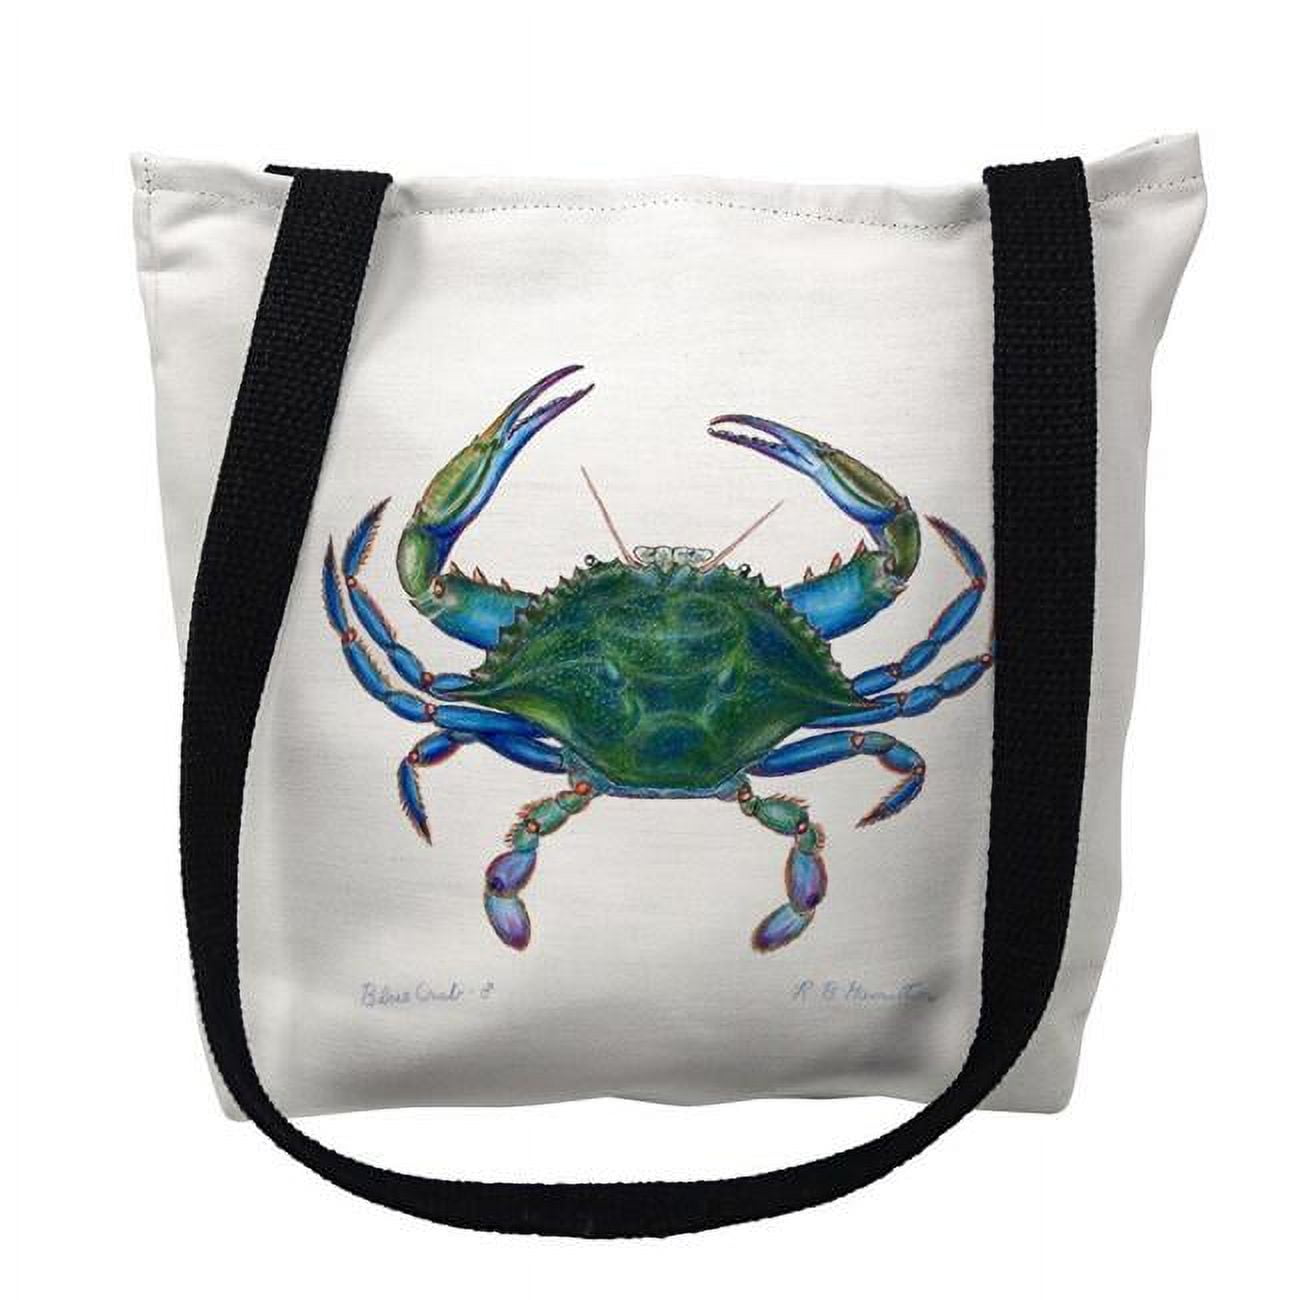 Ty005m 16 X 16 In. Male Blue Crab Tote Bag - Medium